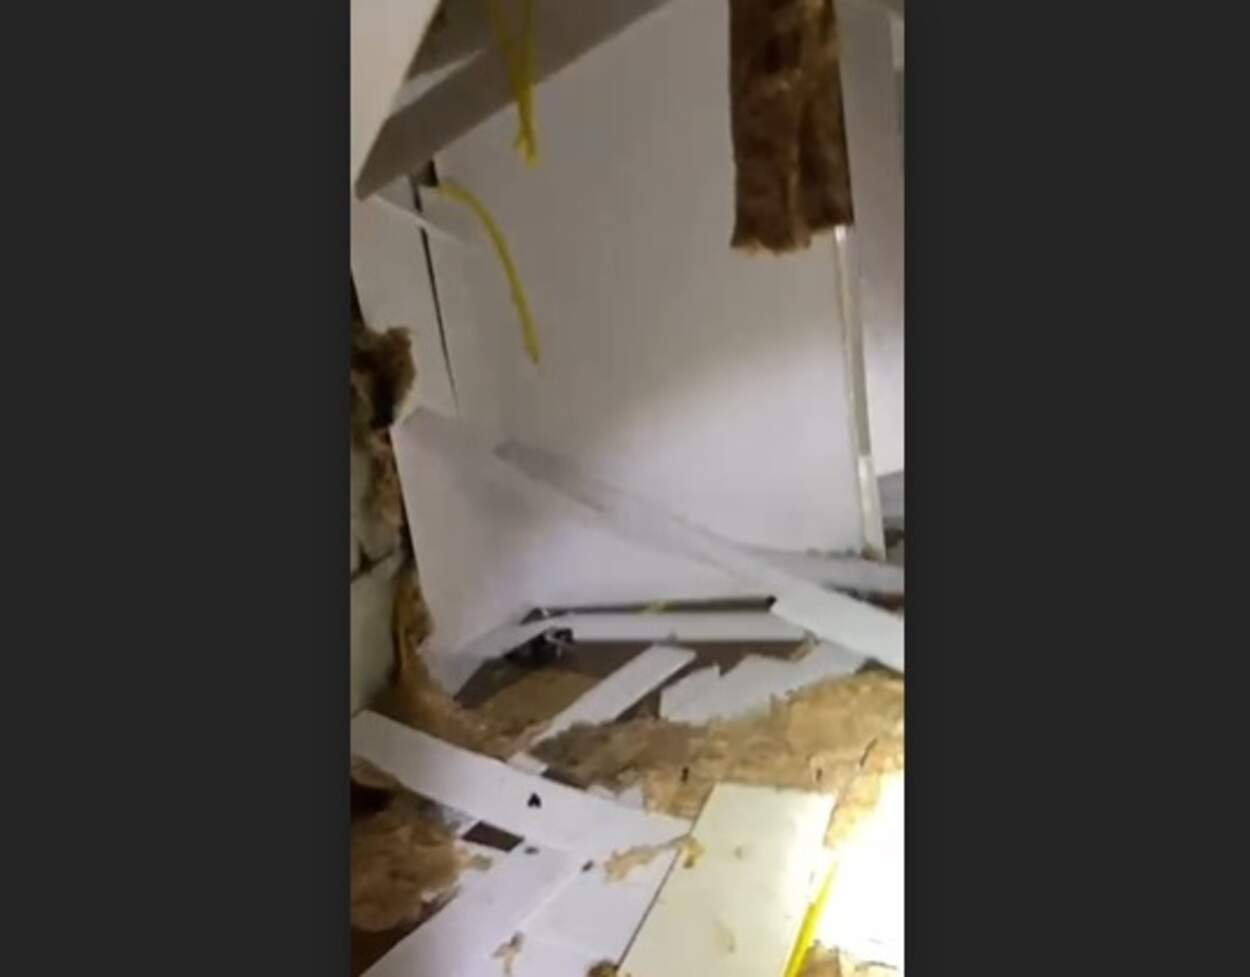 VÍDEO mostra base da Guarda Municipal destruída após ser arrombada e invadida no Noroeste